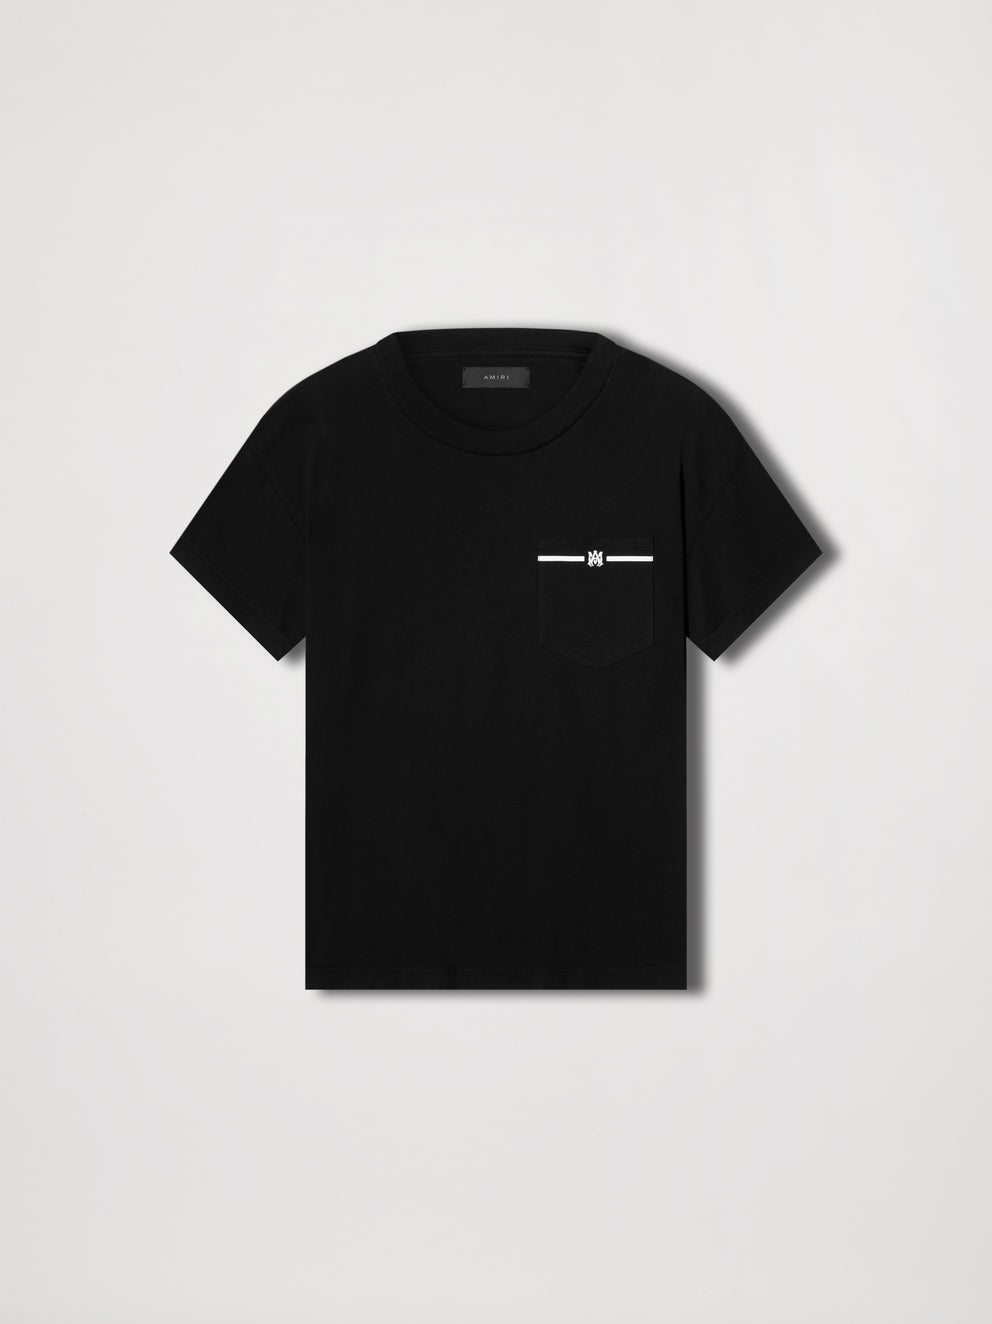 Camisas Amiri M.A. Pocket Hombre Negras | 9250-EGPUT